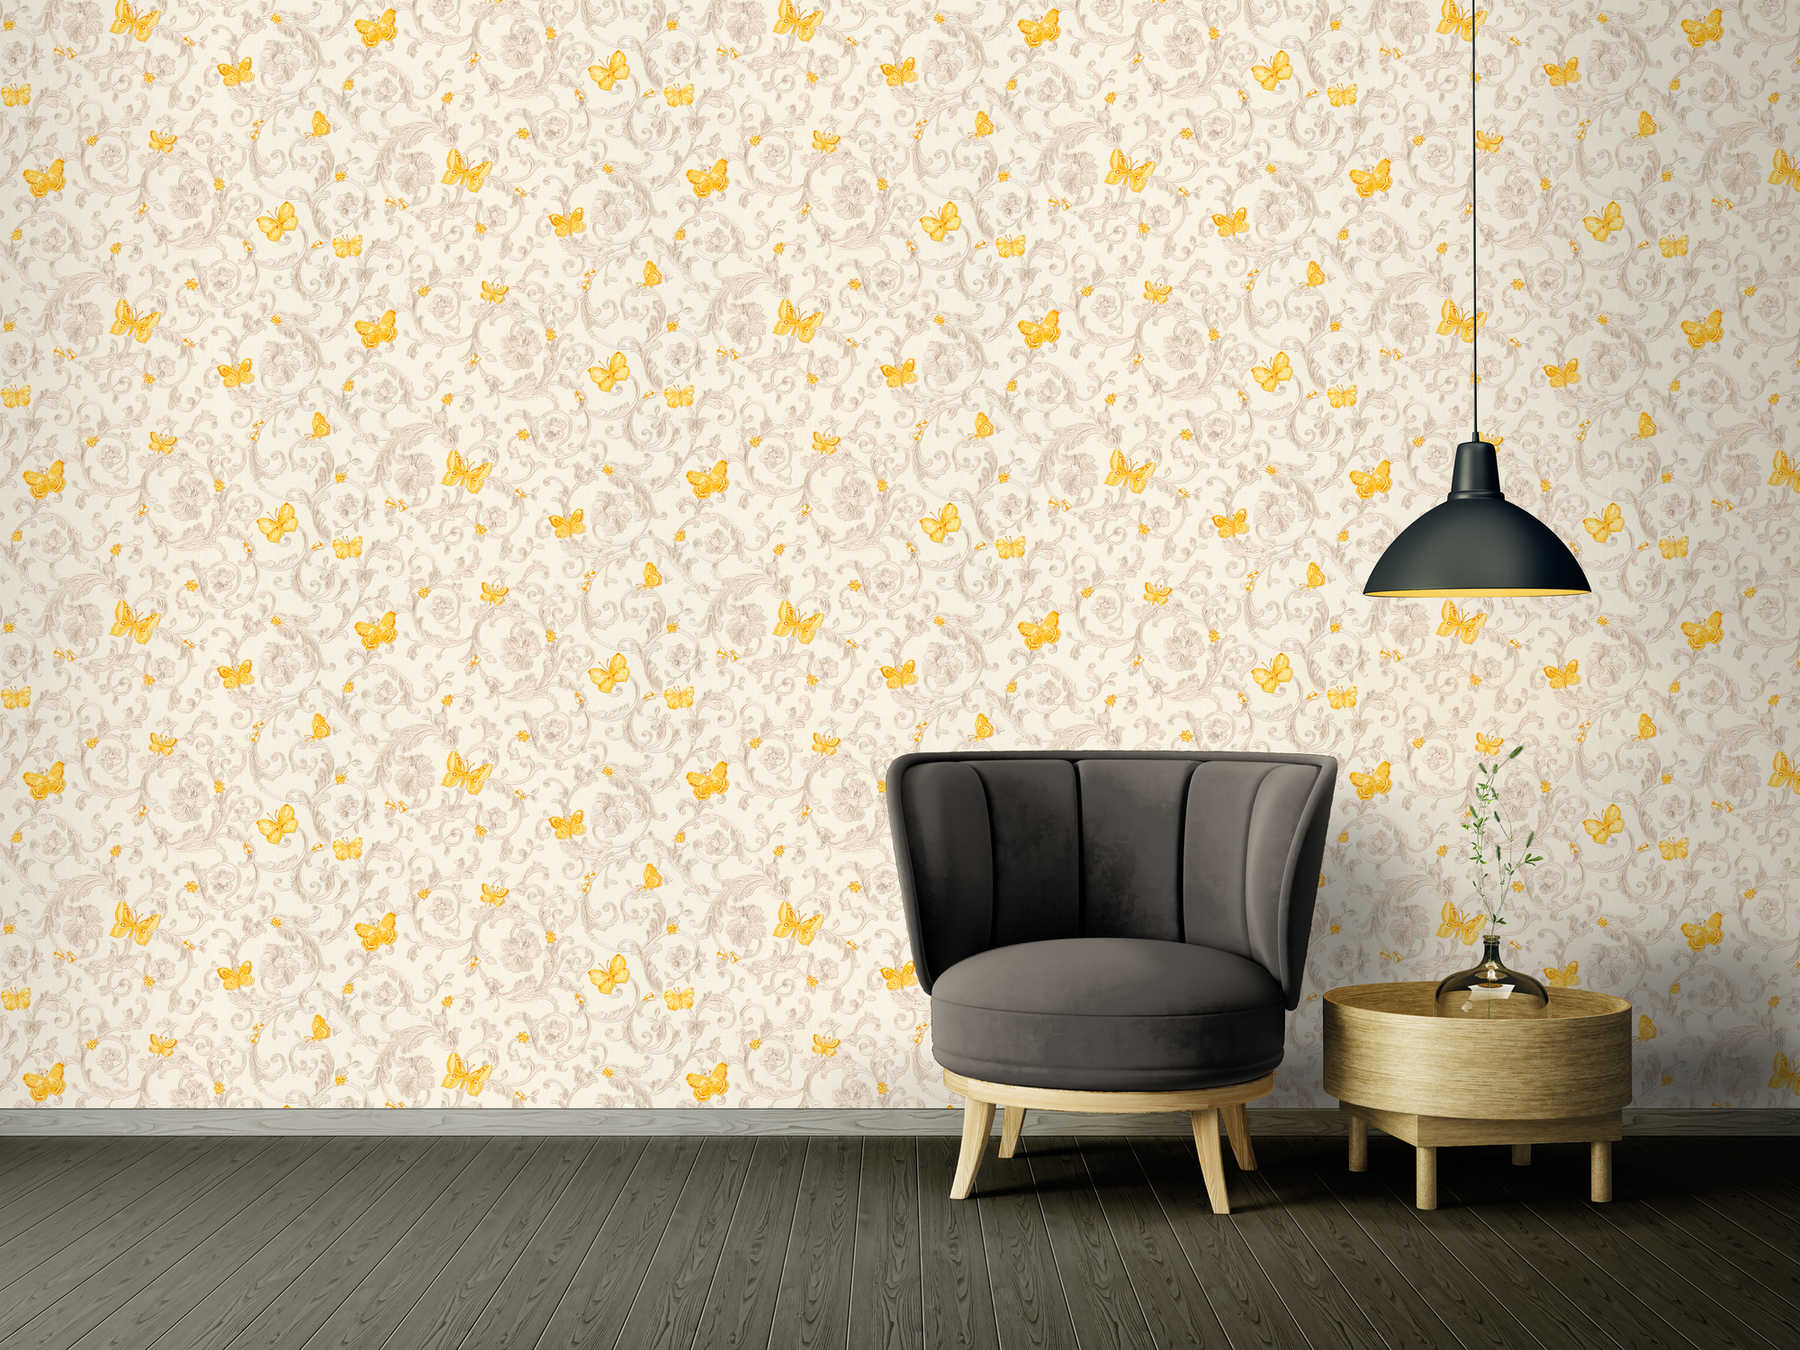             Wallpaper VERSACE with butterflies & ornaments - cream, gold
        